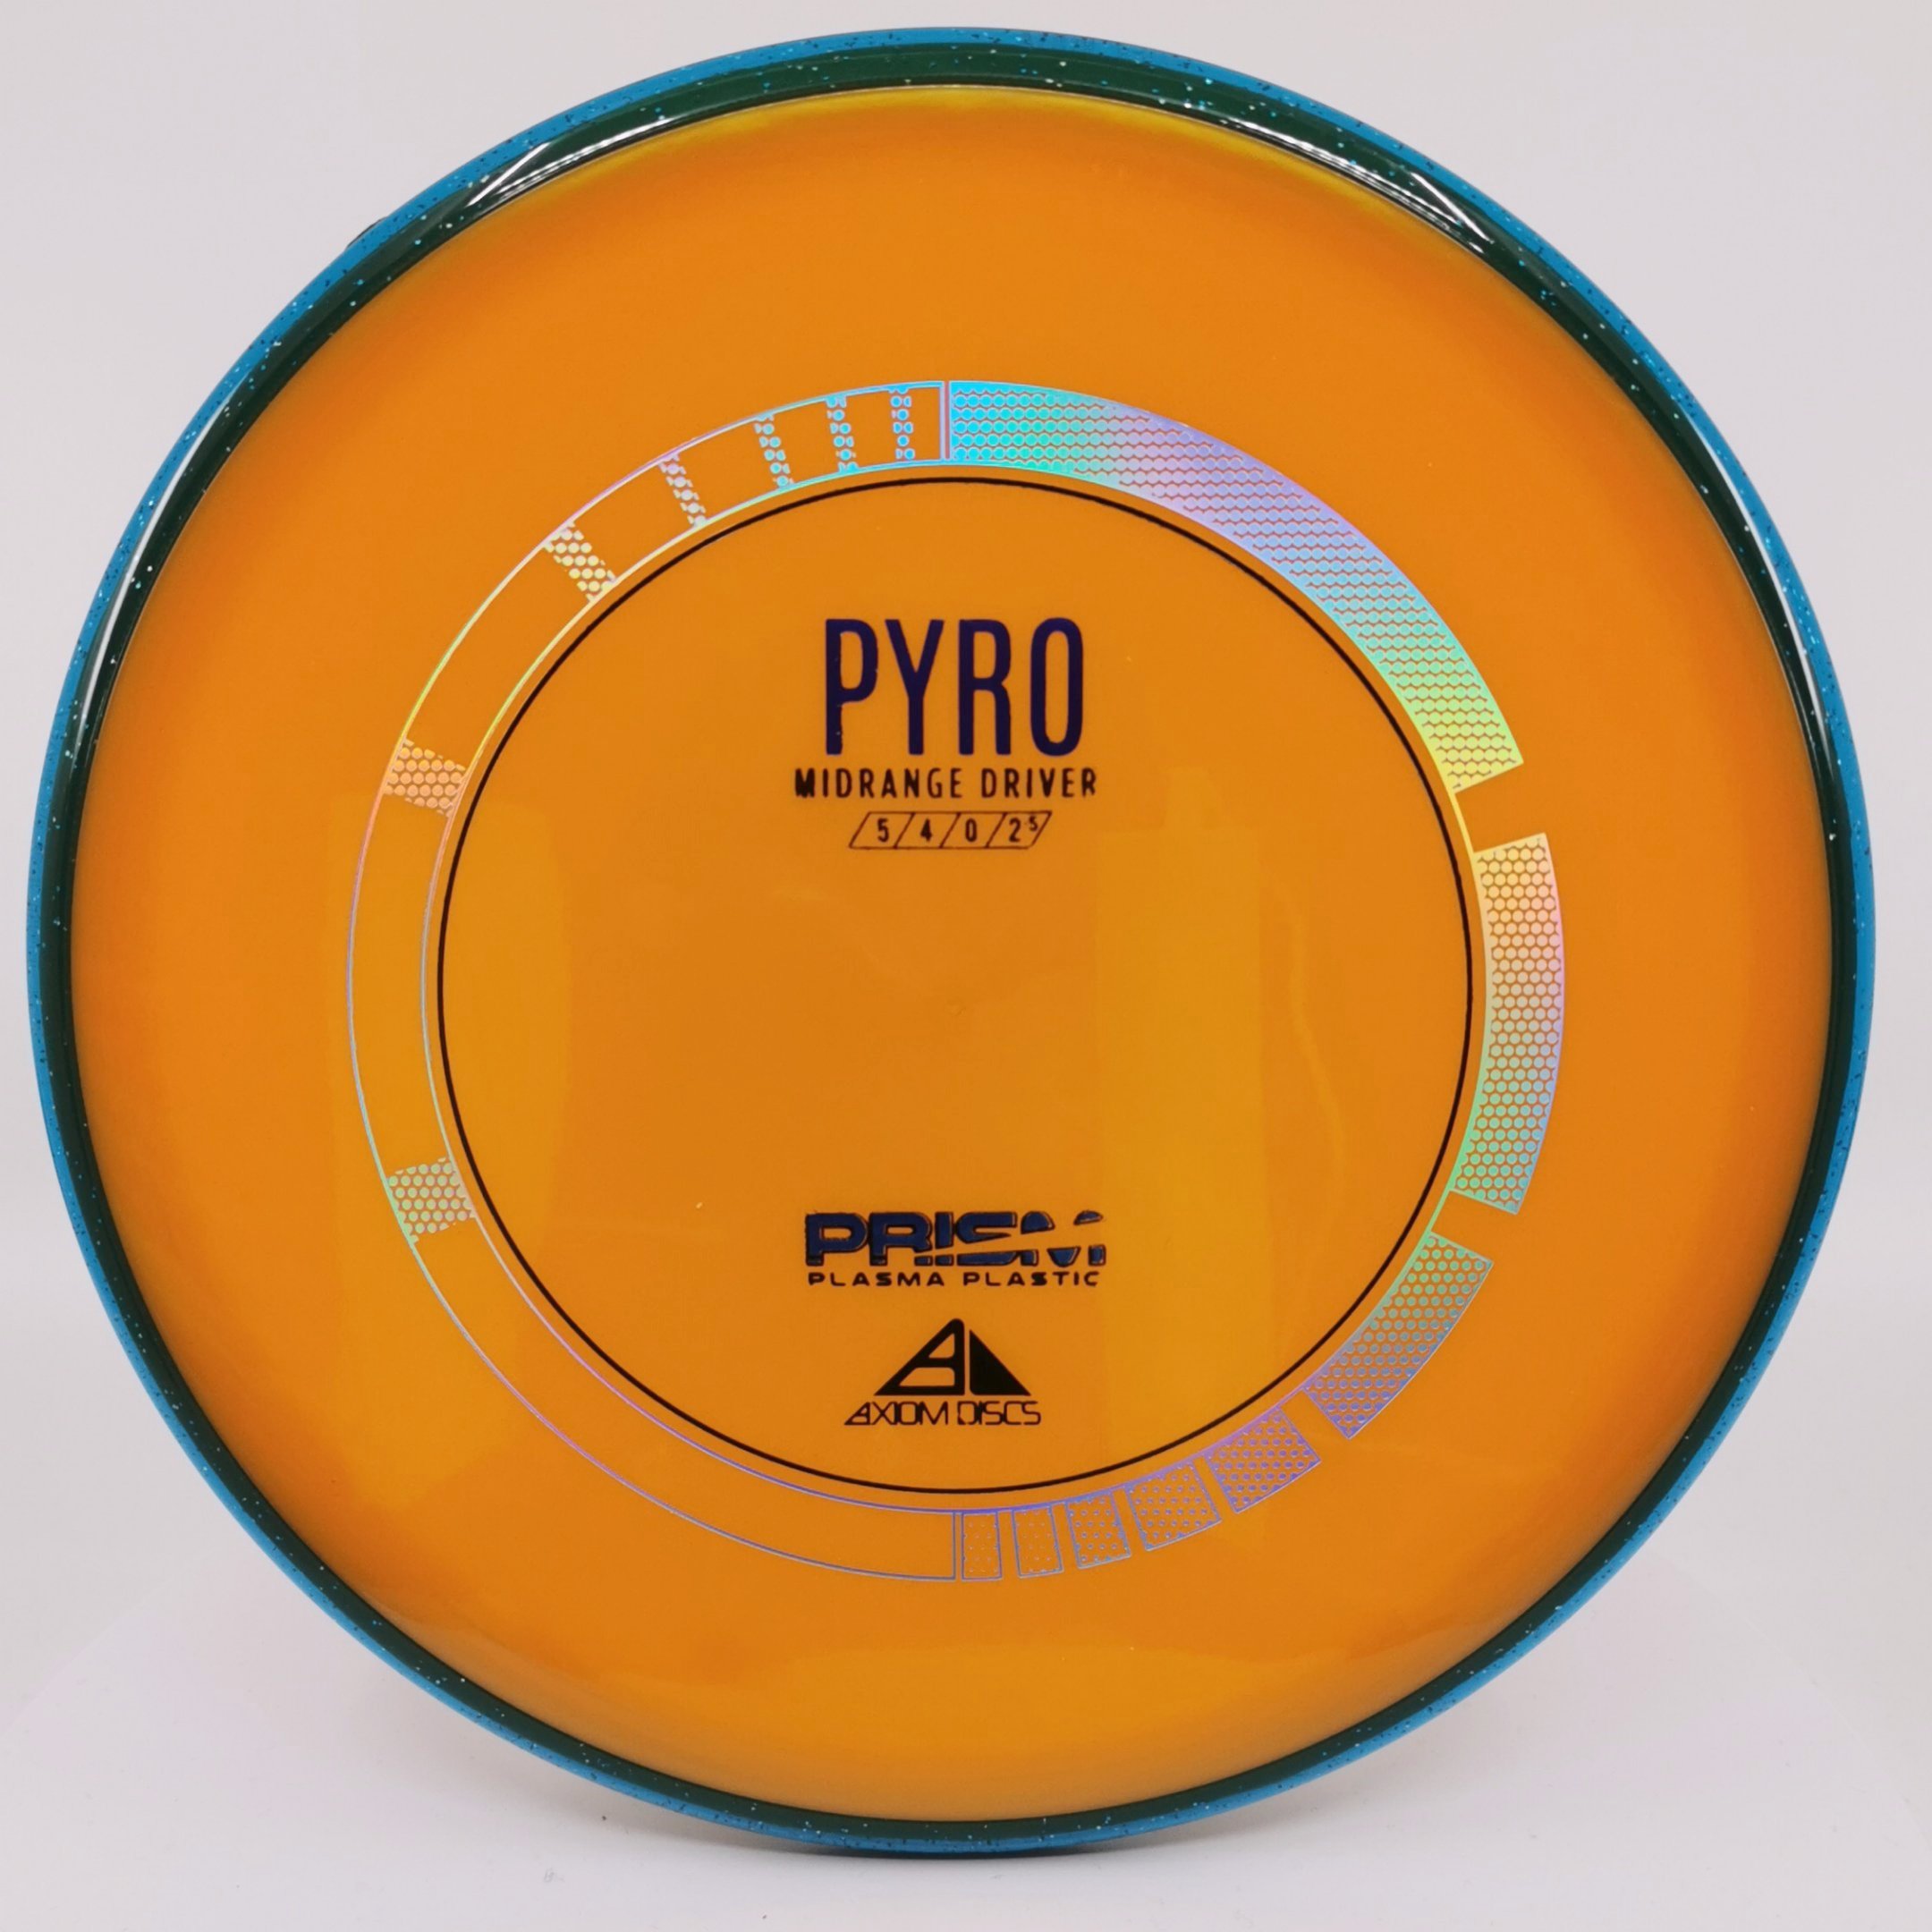 pyro-prism-plasma-thule-discgolf